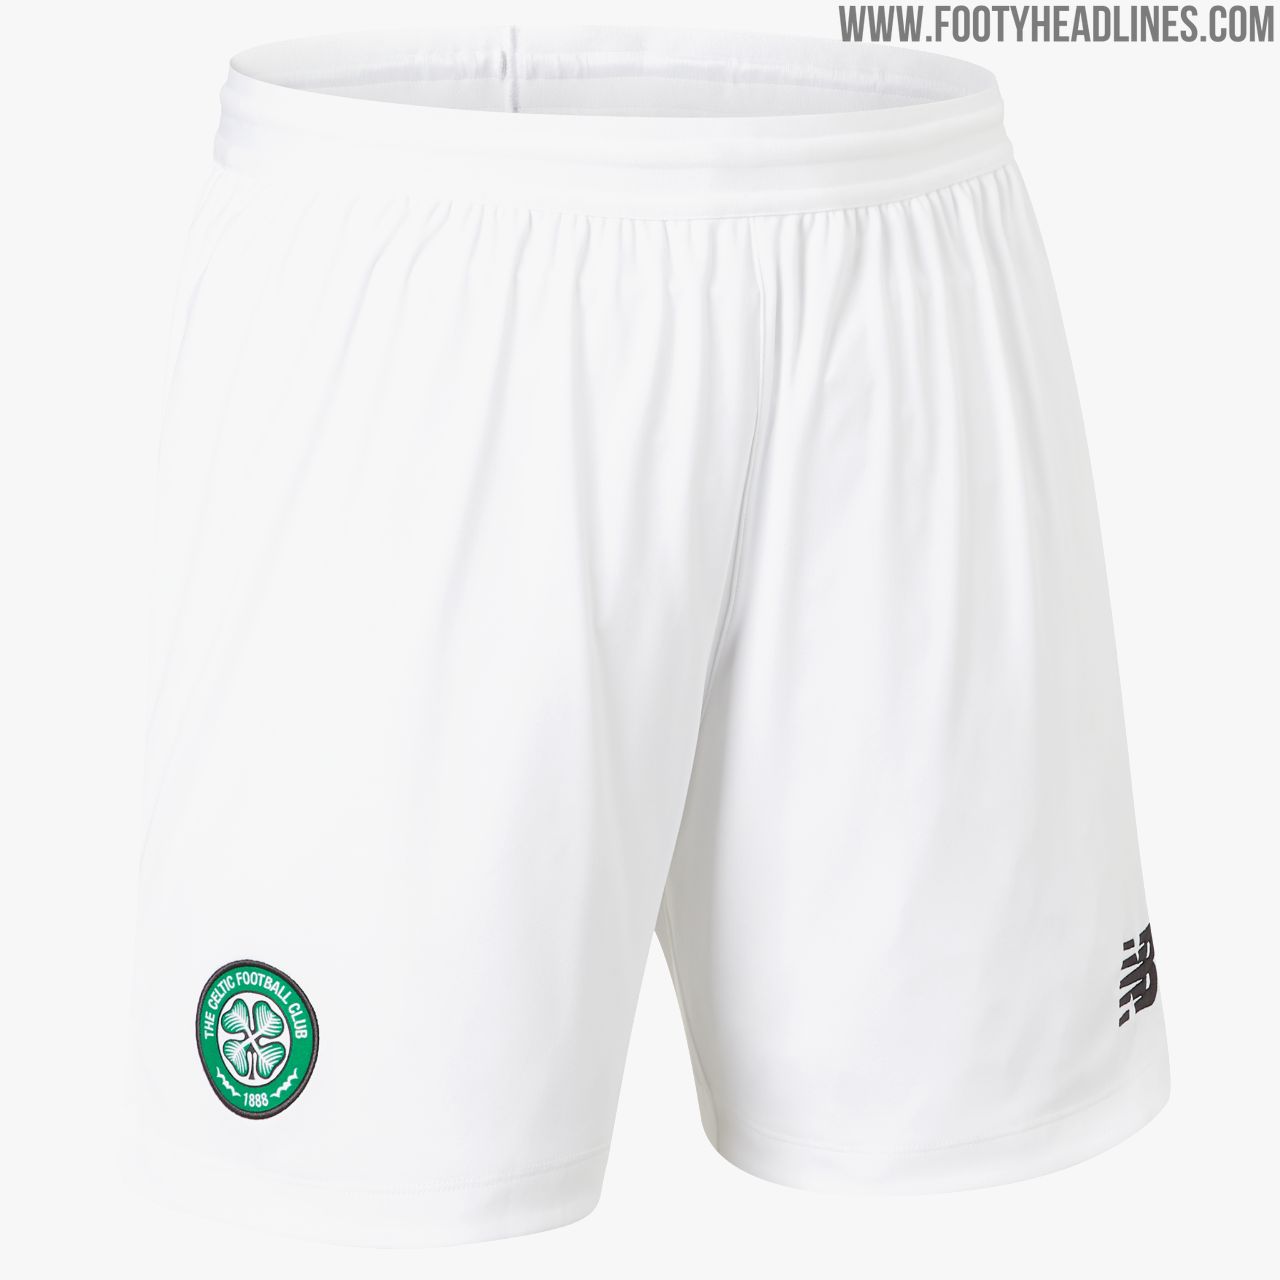 Celtic 18-19 Home Kit Released - Footy Headlines